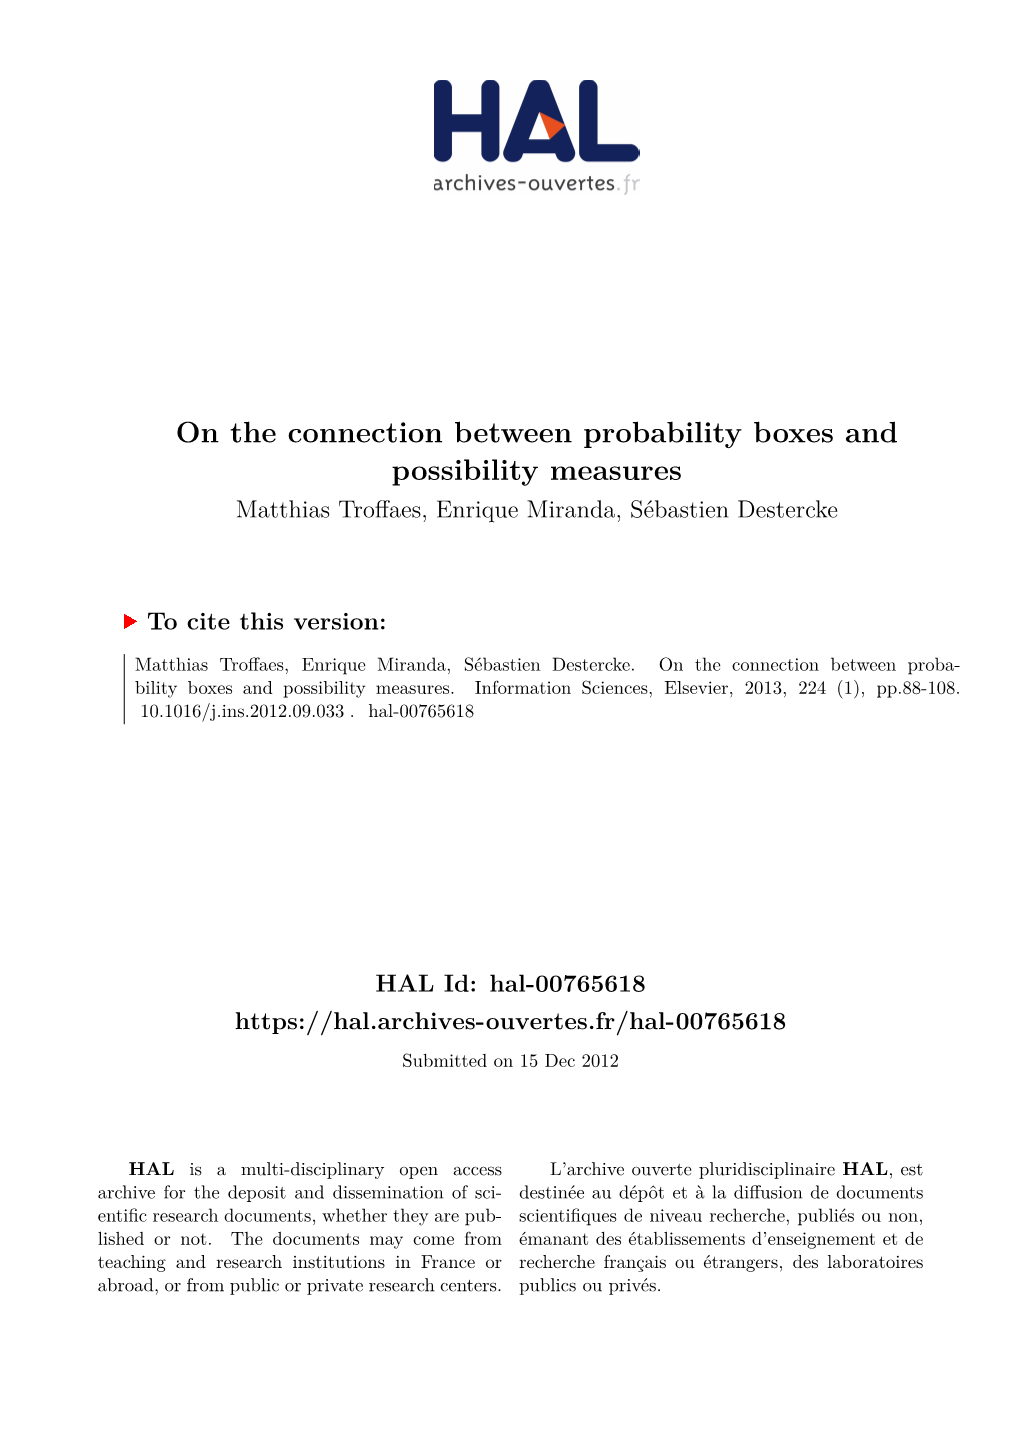 On the Connection Between Probability Boxes and Possibility Measures Matthias Troffaes, Enrique Miranda, Sébastien Destercke